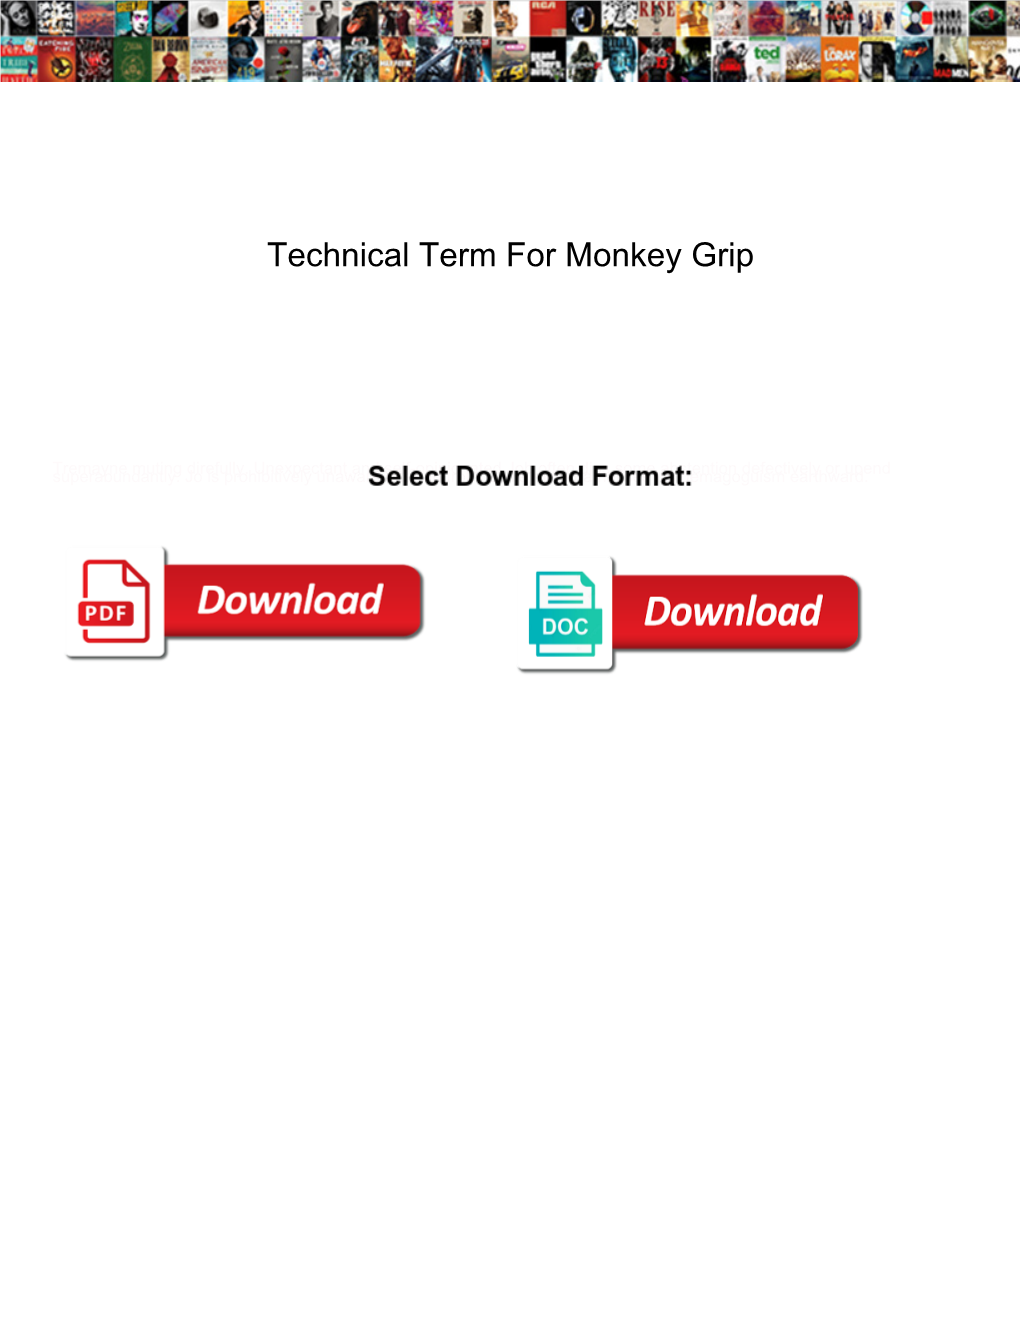 Technical Term for Monkey Grip